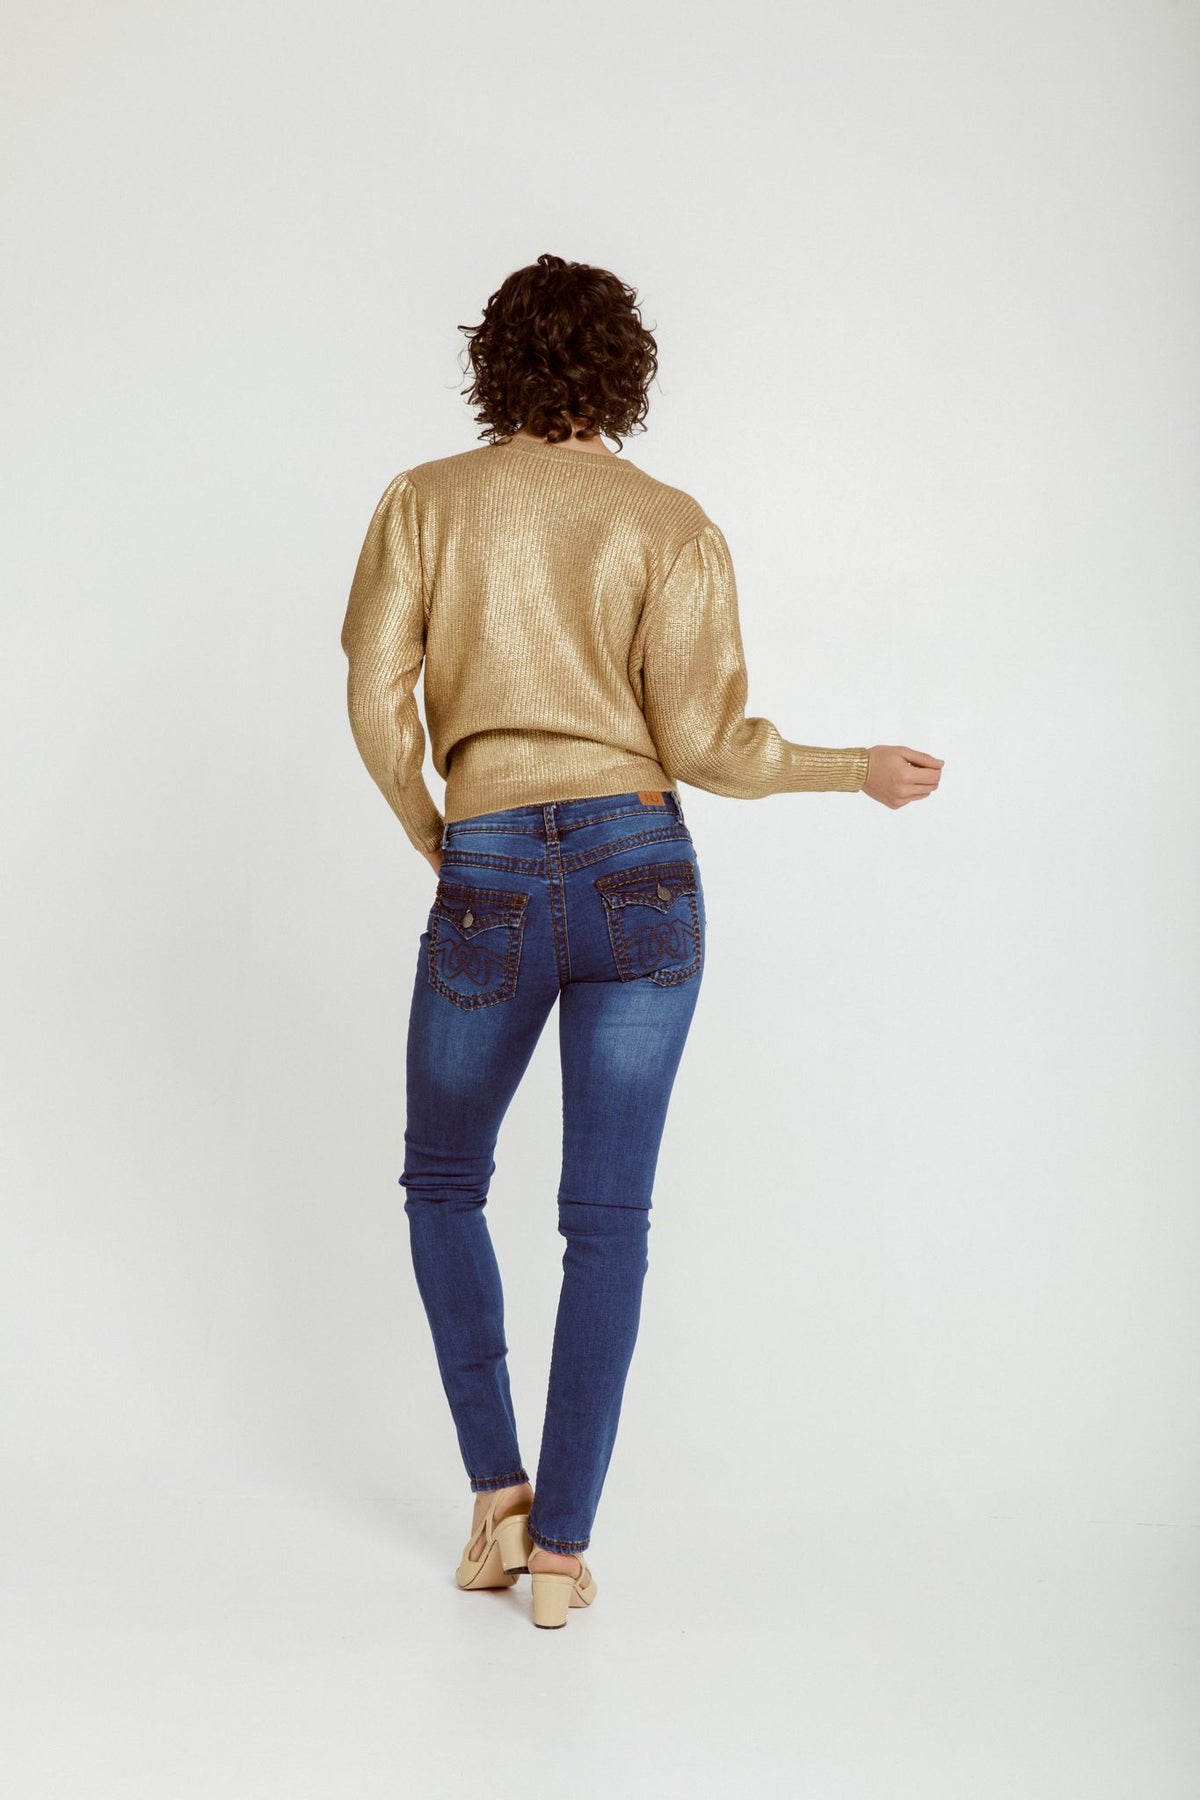 New London Jeans  - Chelsea - Winter Bronze Stitch